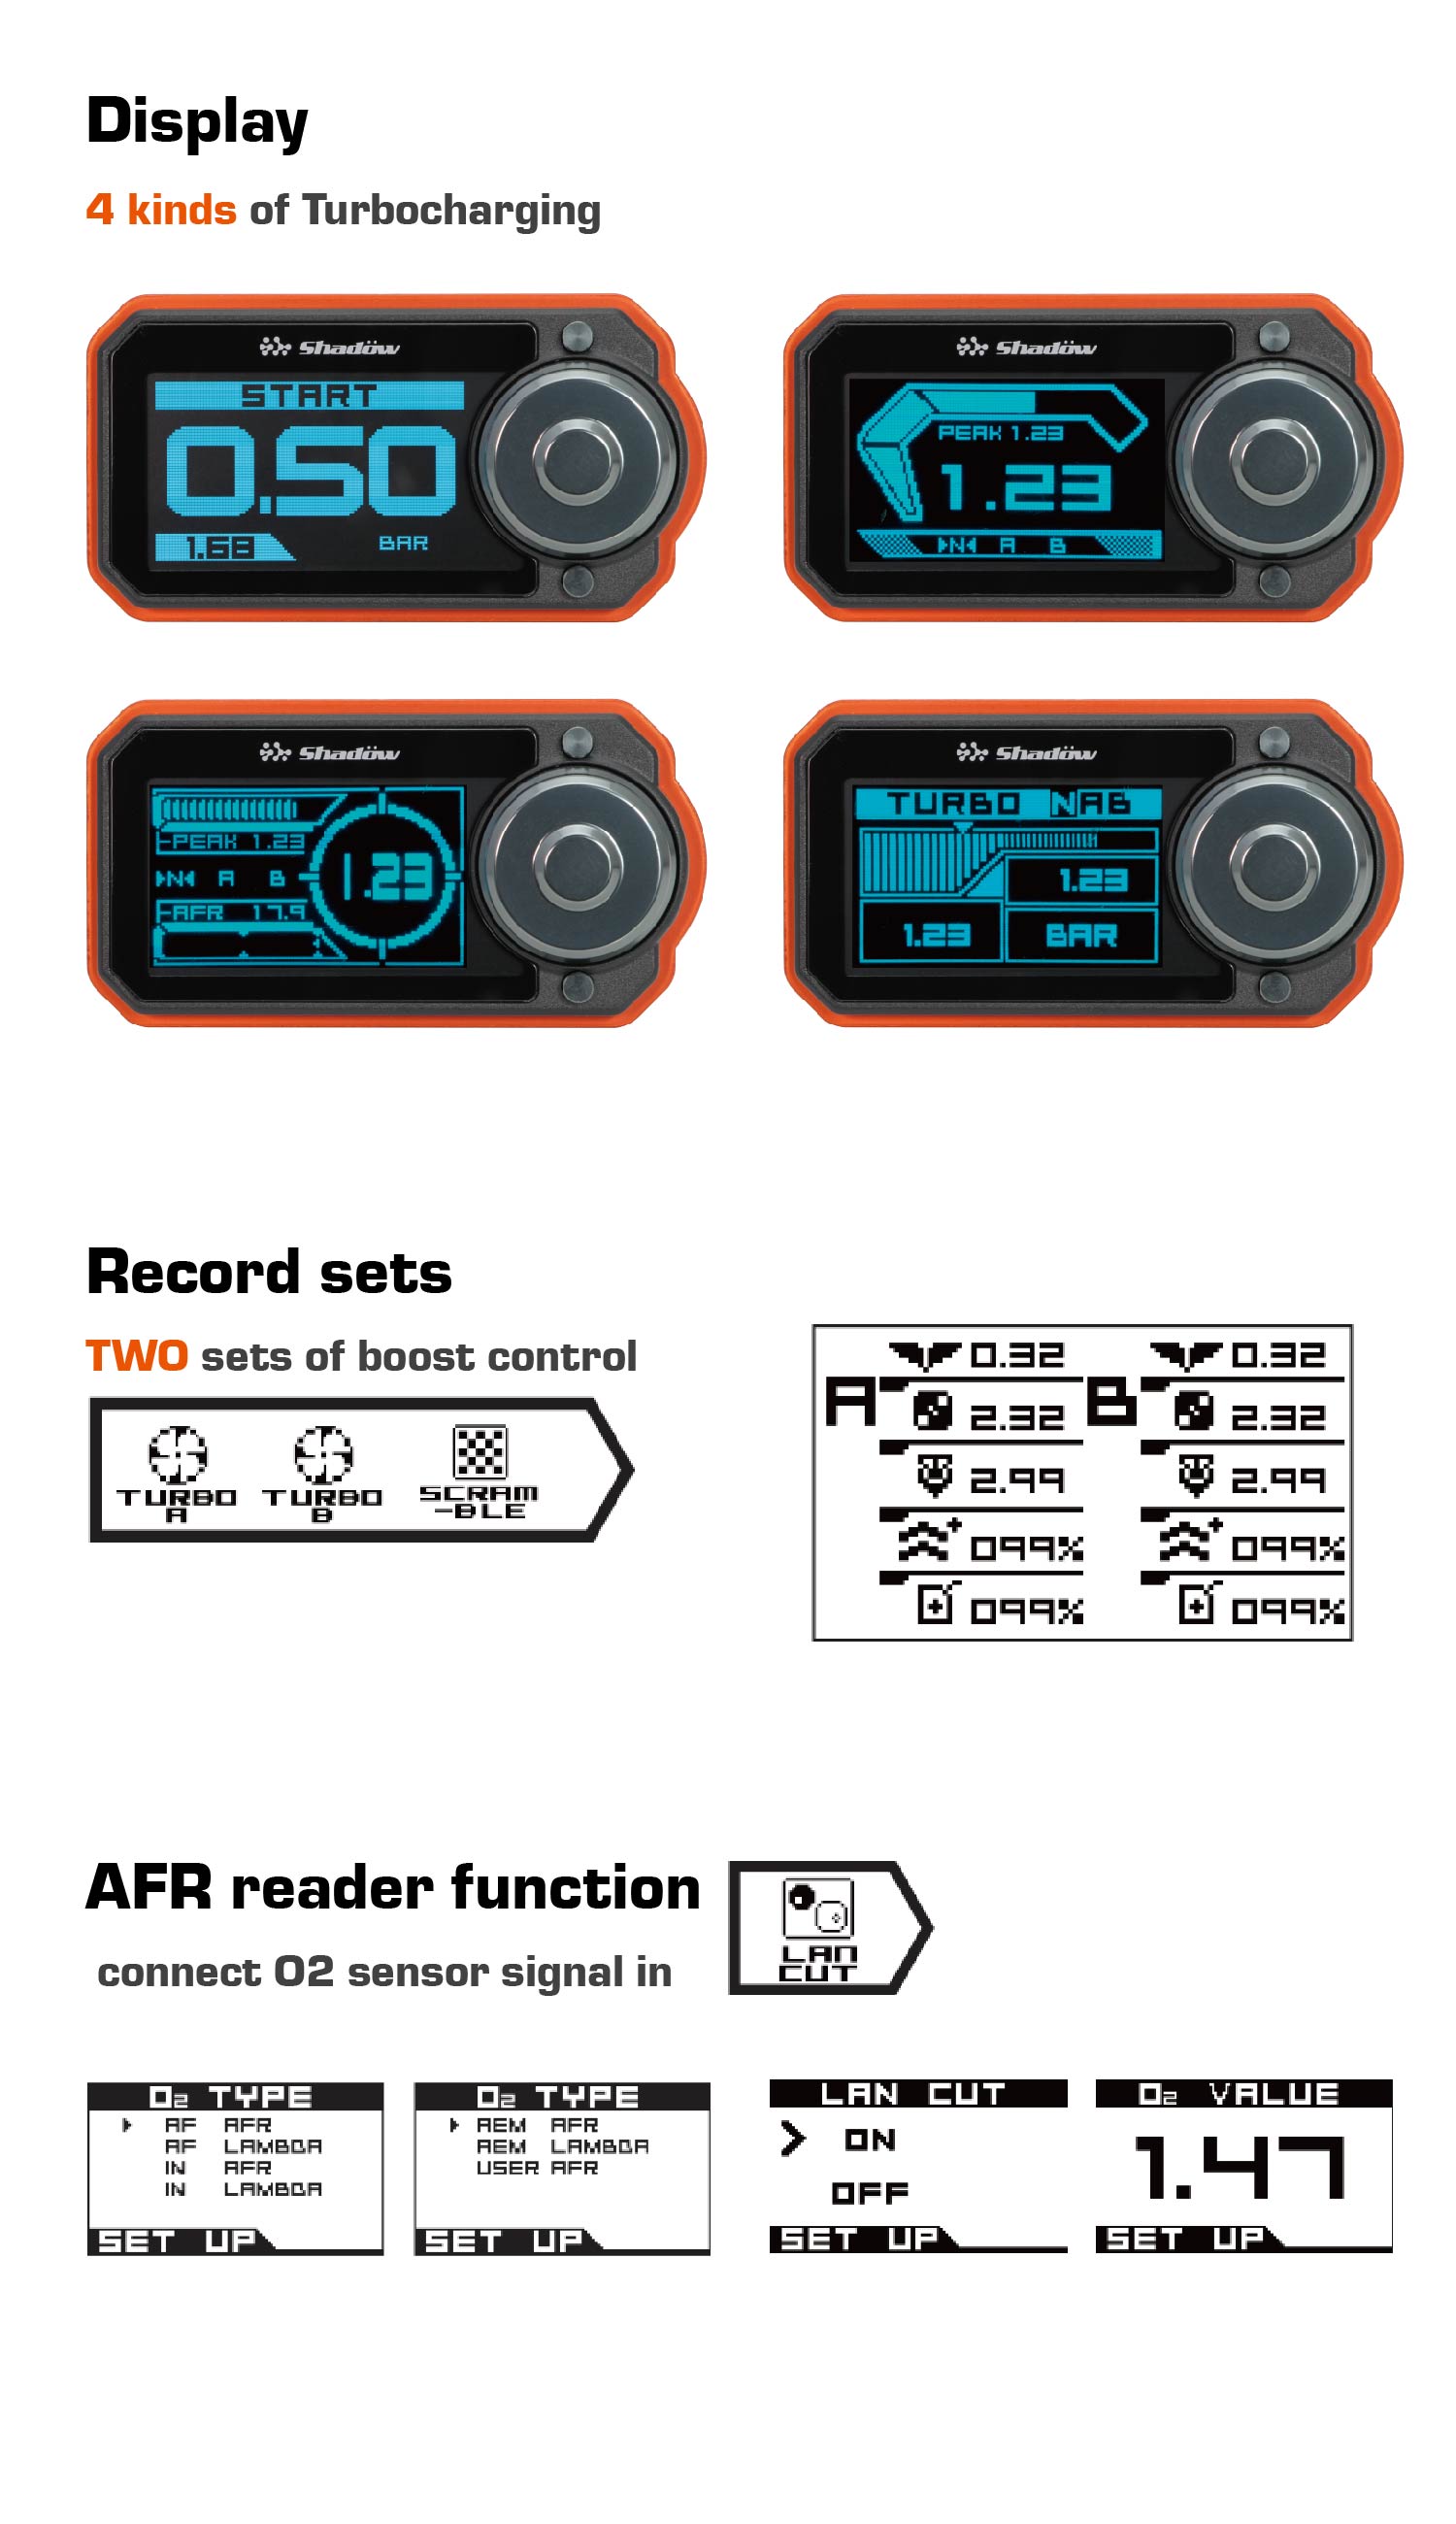 4 kinds of Turbocharging,TWO sets of boost control,AFR reader function.